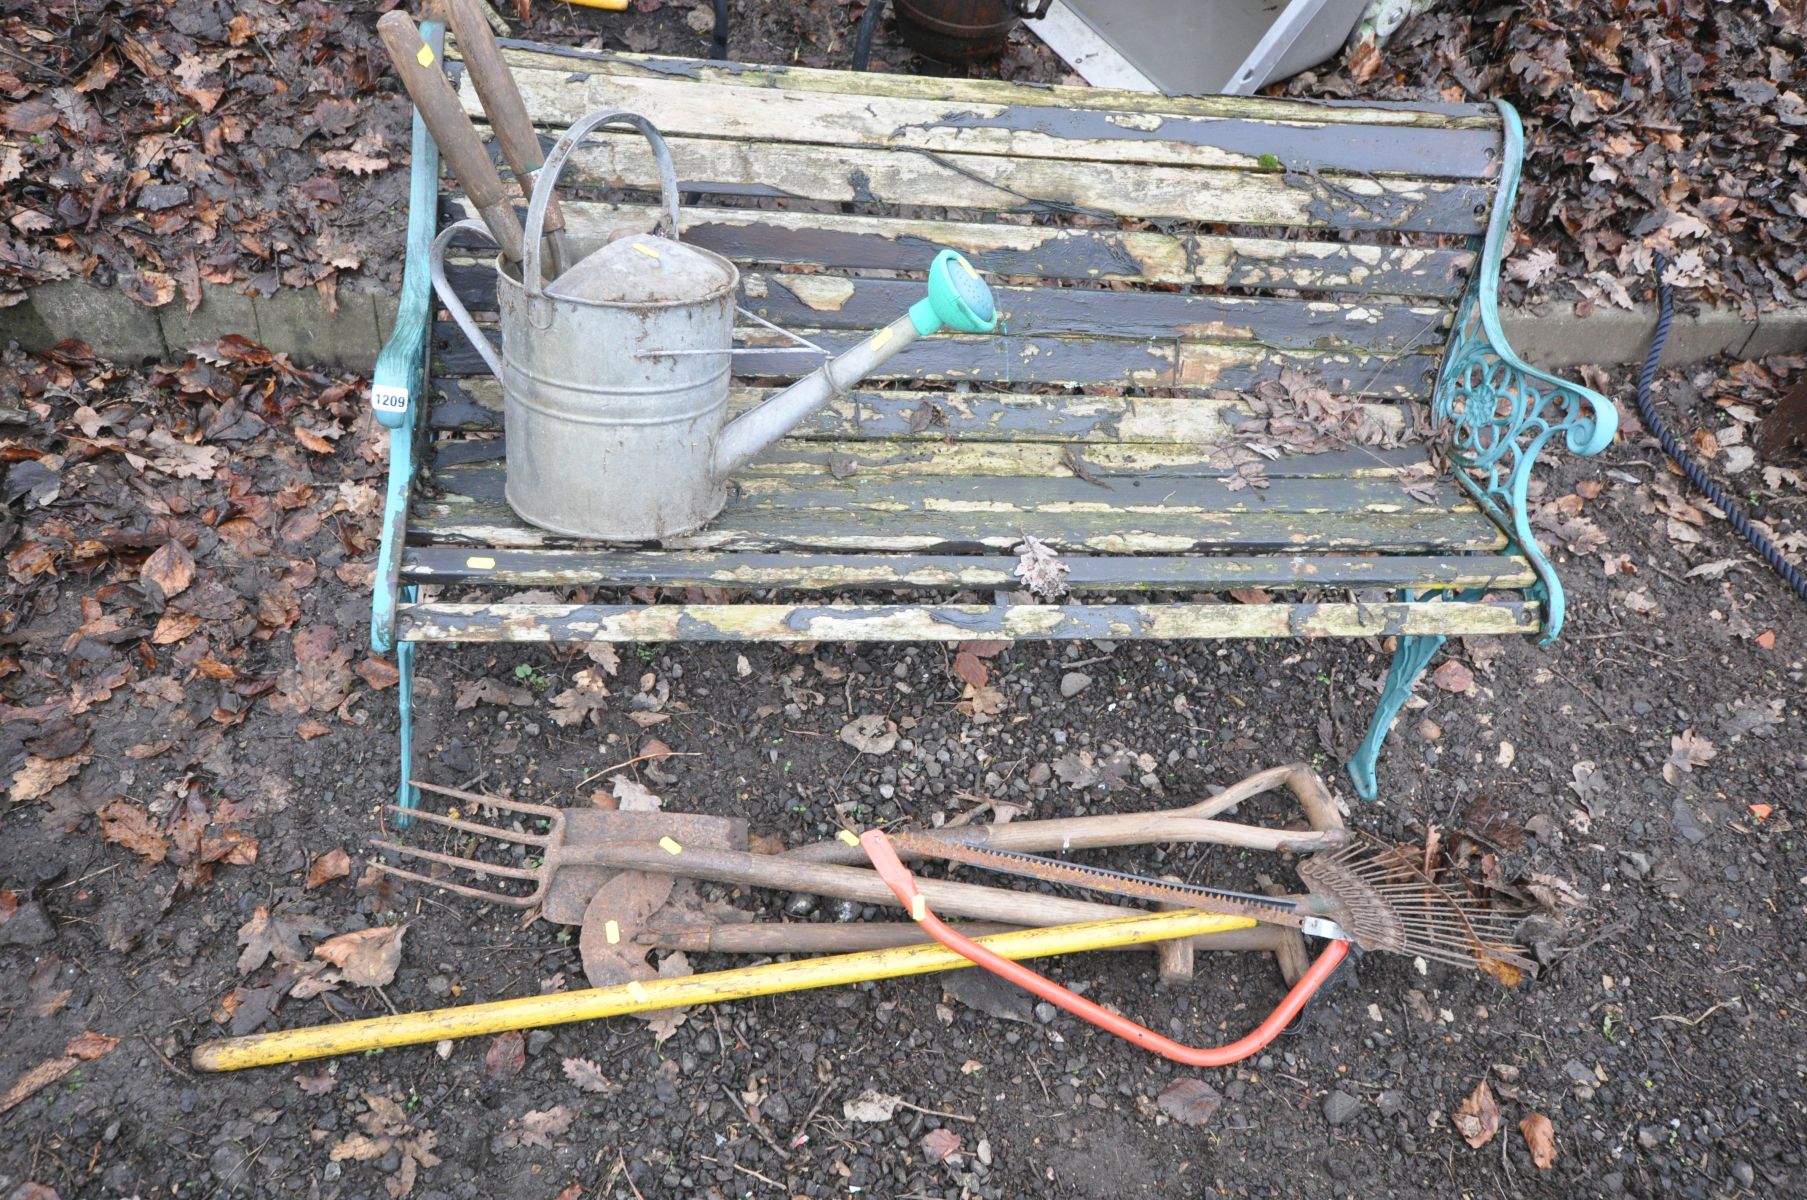 AN ALUMINIUM GARDEN BENCH with distressed slats, length 125cm, various garden hand tools and a